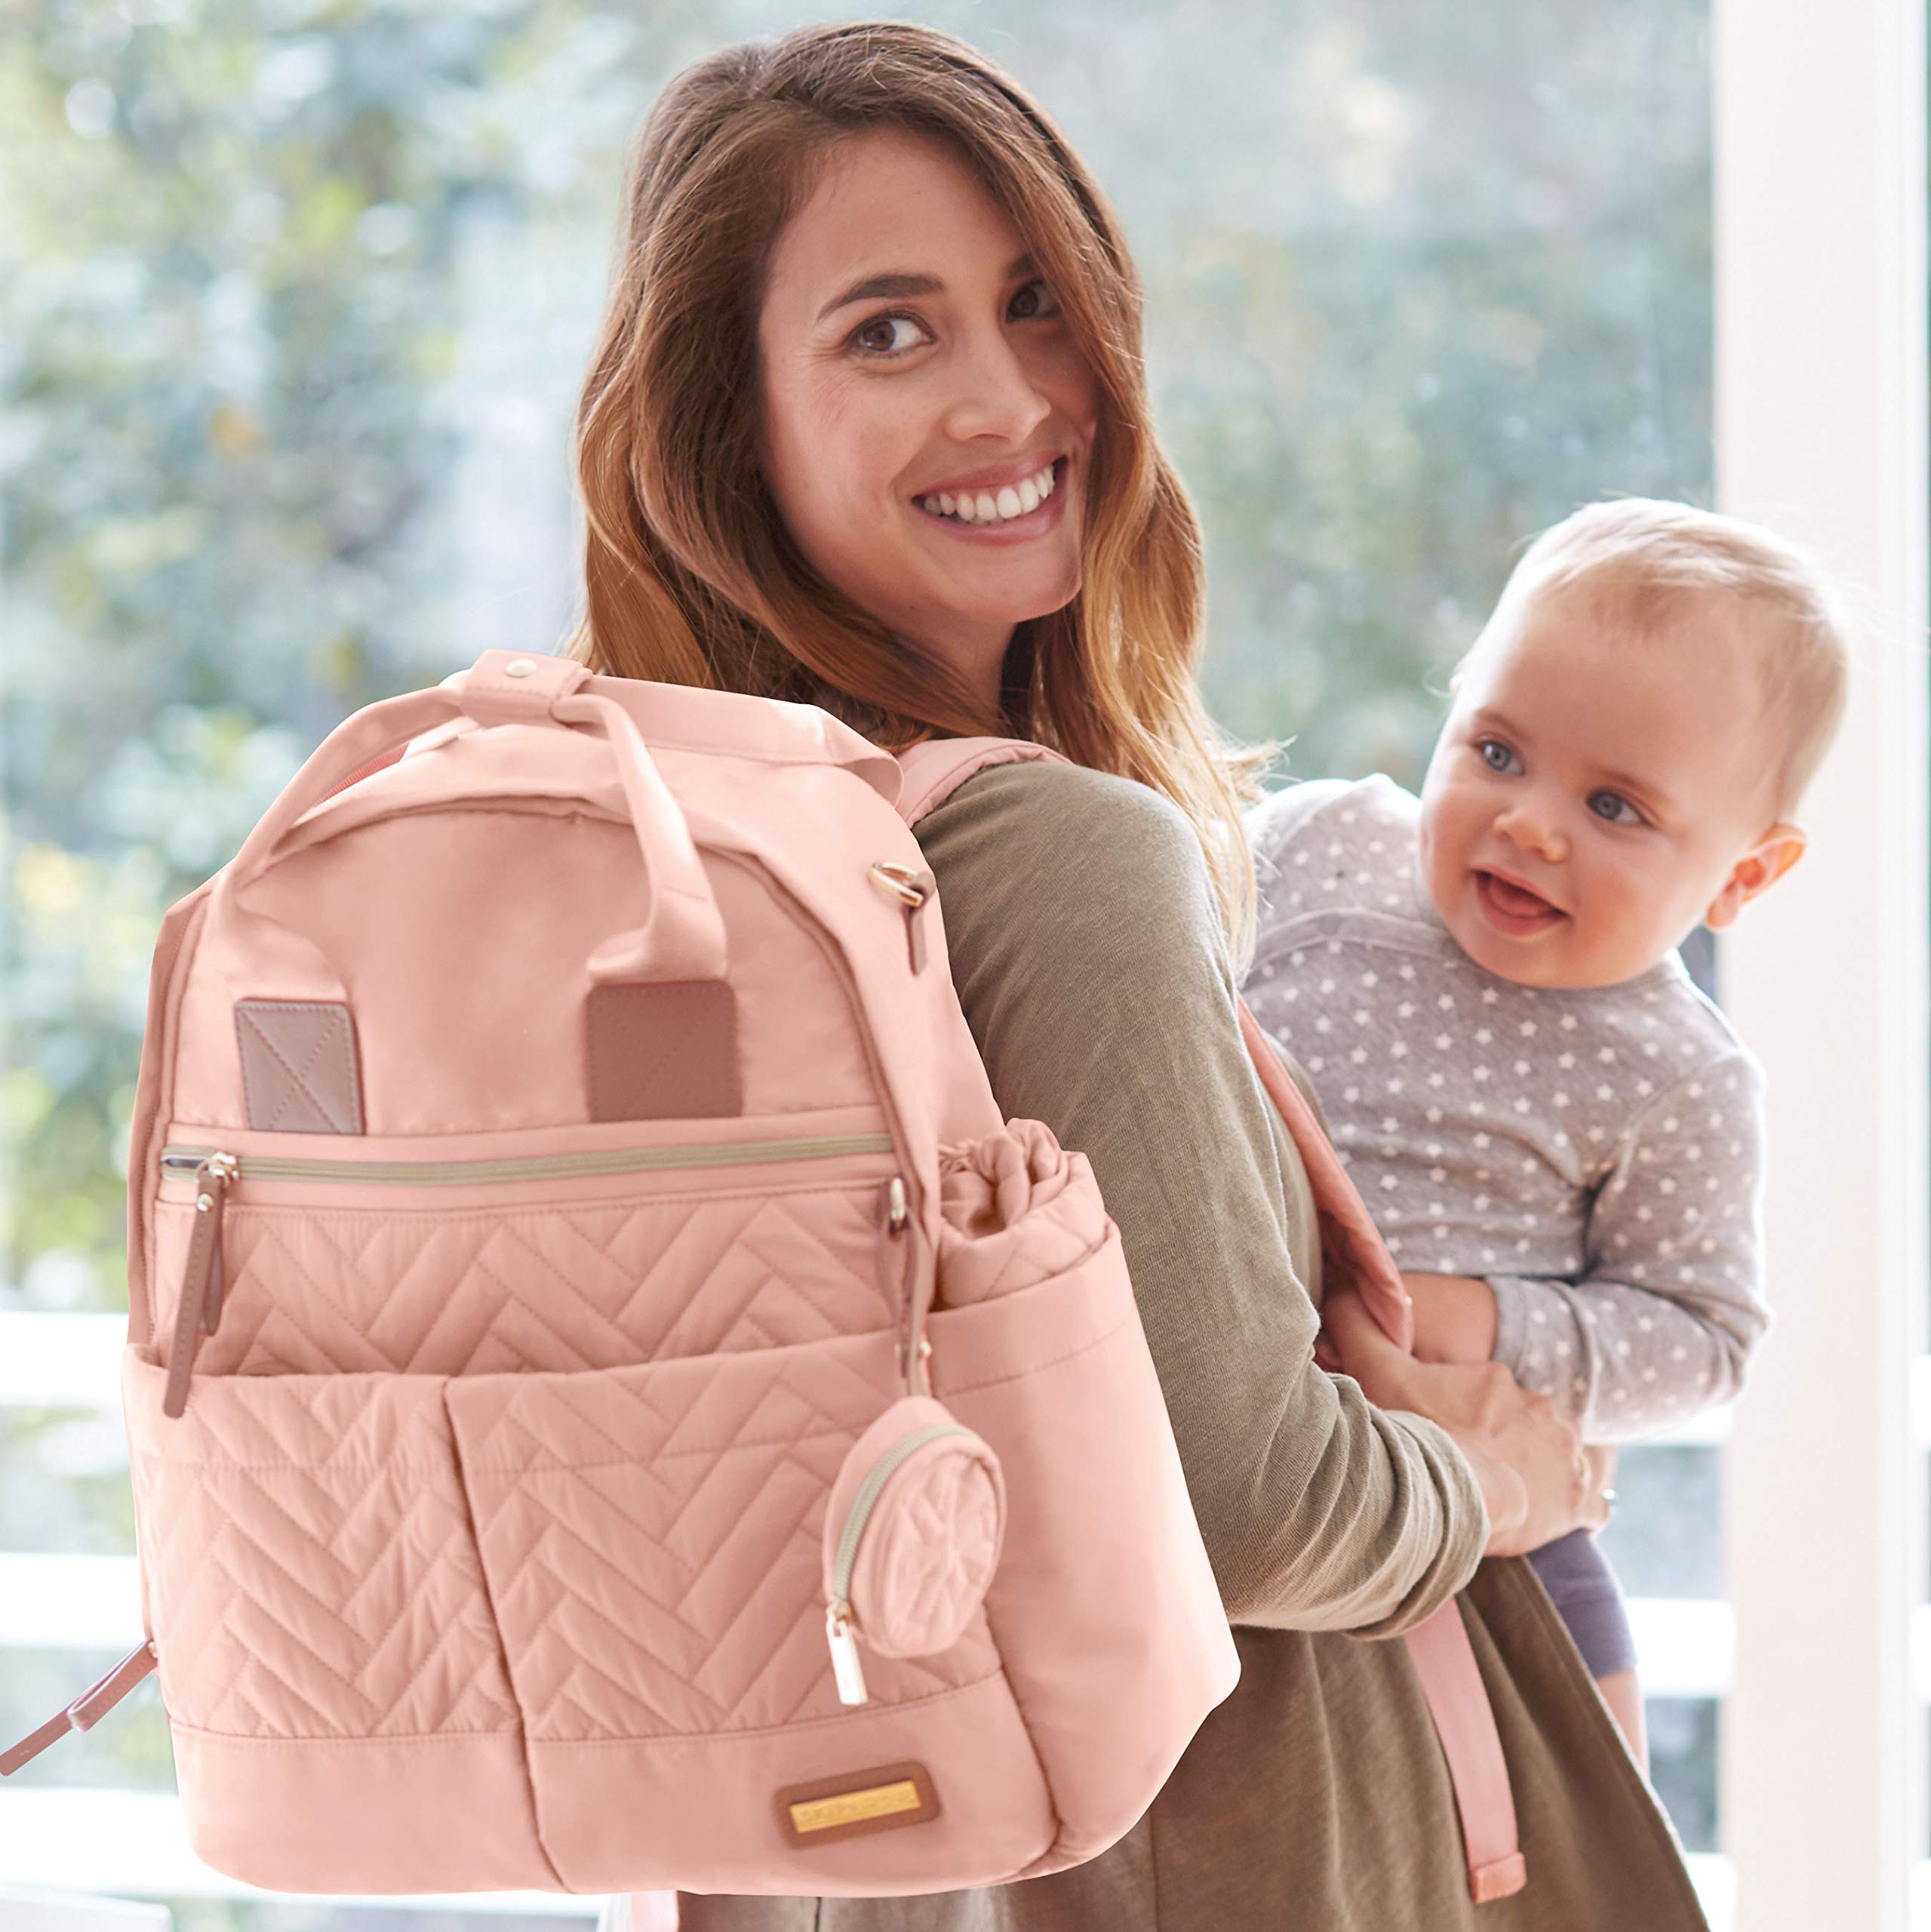 Skip Hop Diaper Bag Backpack: Suite 6-in-1 Diaper Backpack Set, Multi-Function Baby Travel Bag with Changing Pad, Stroller Straps, Bottle Bag and Pacifier Pocket, Blush